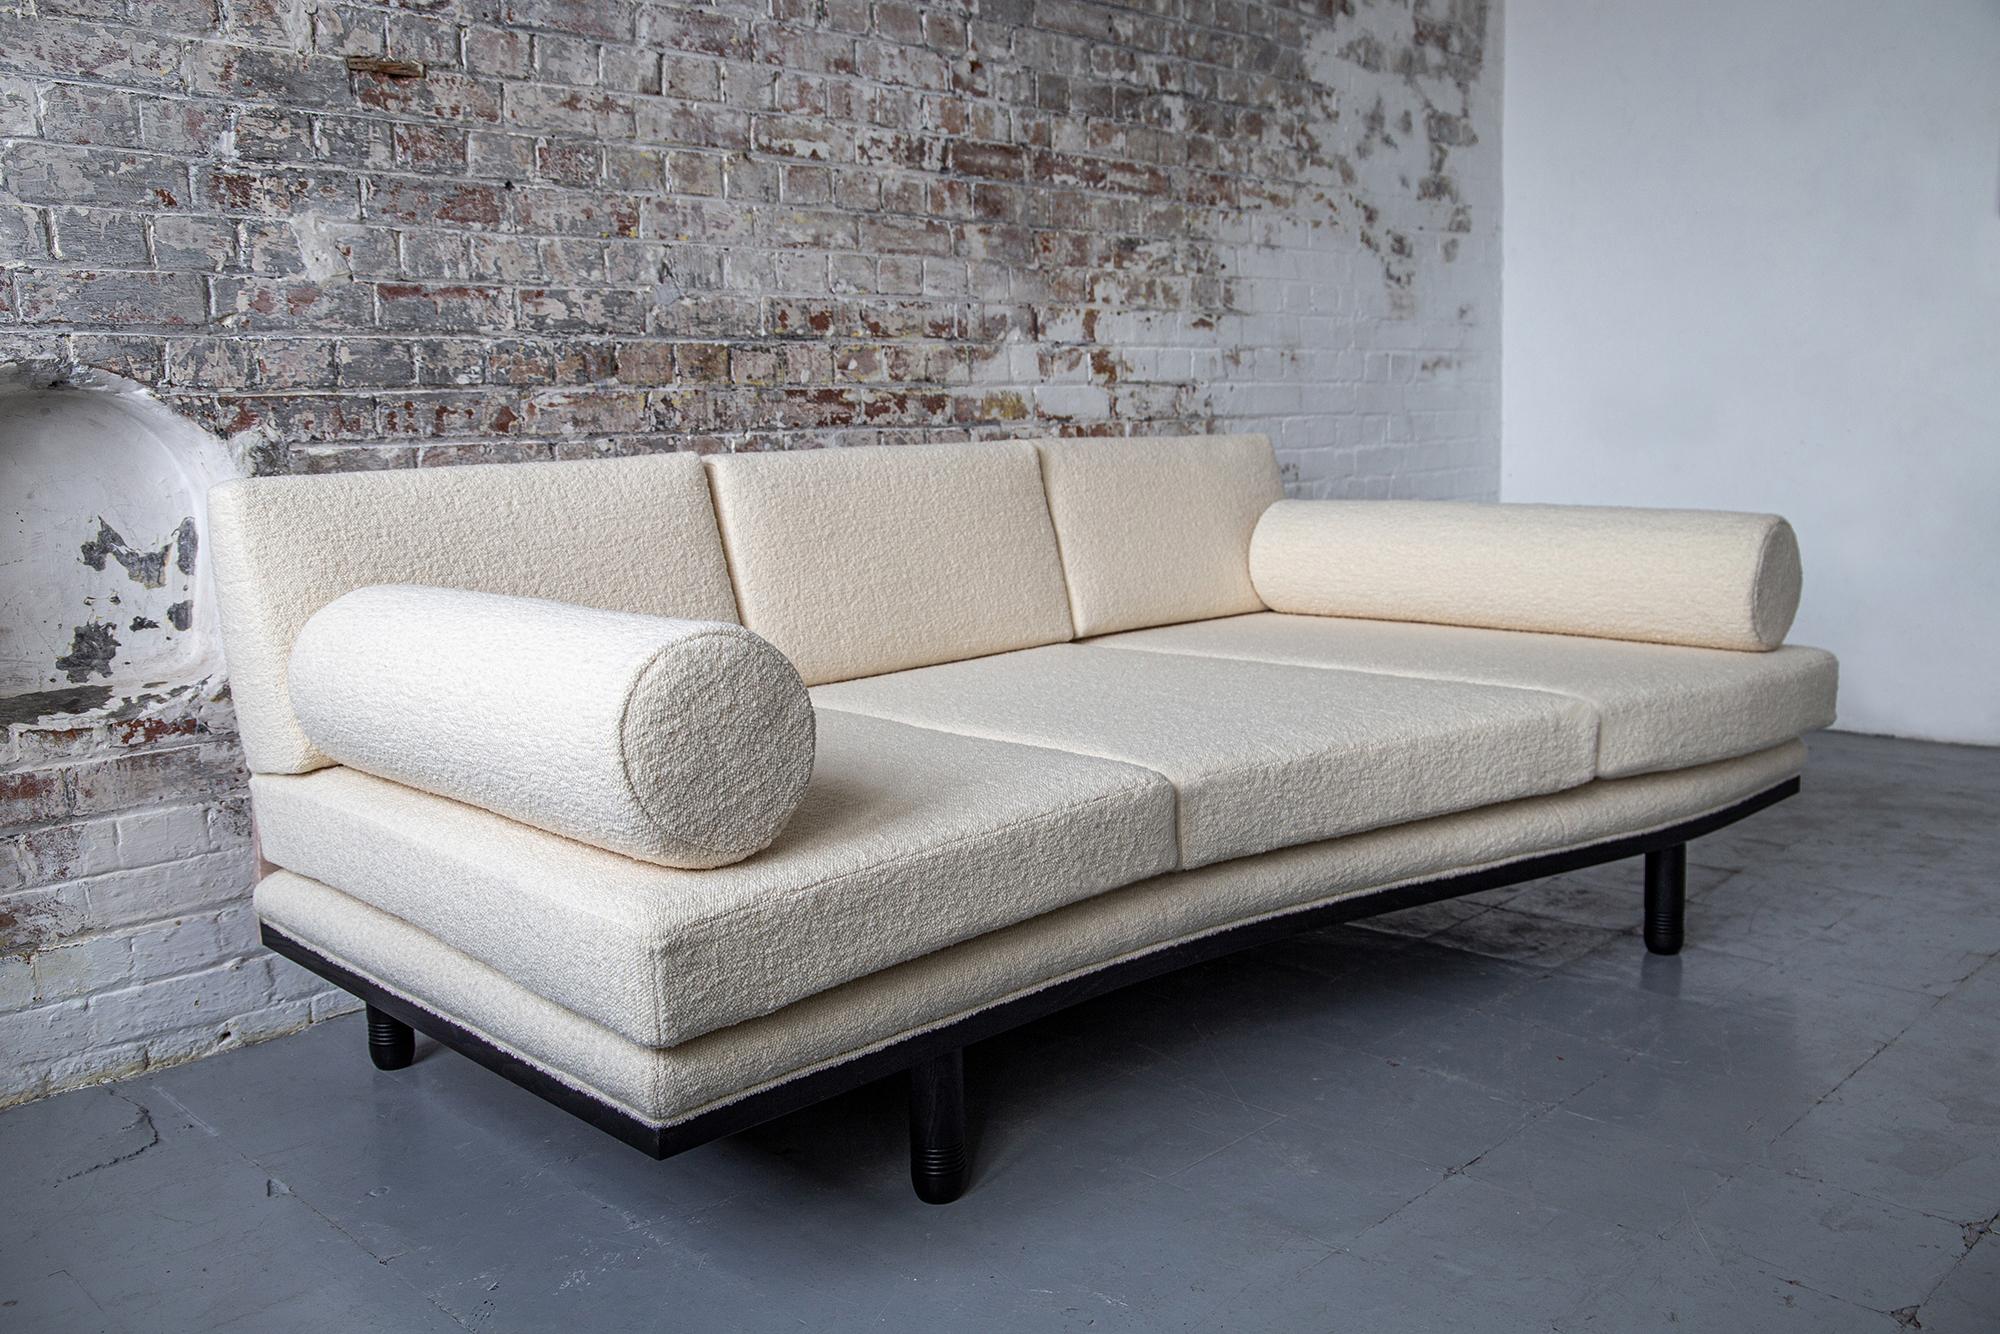 Baalbek, Trapezförmiges Sofa Daybed von Toad Gallery, Contemporary Edition 2022 (Asche) im Angebot